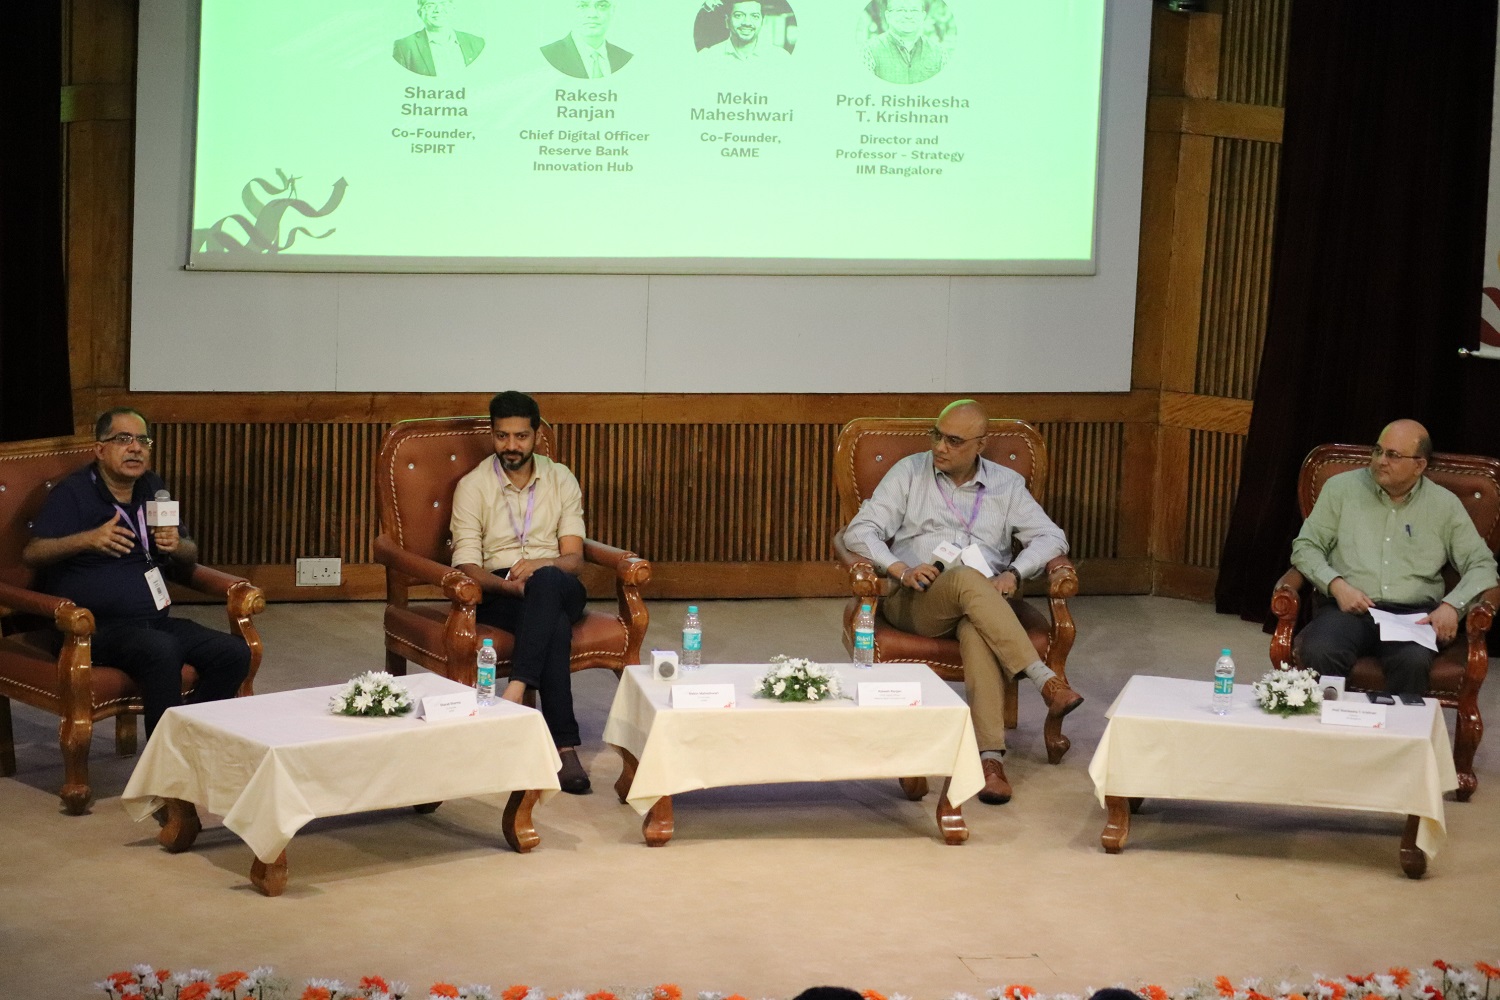 Sharad Sharma, Co-founder, iSPIRT Foundation; Rakesh Ranjan,Chief Digital Officer at Reserve Bank Innovation Hub; Mekin Maheshwari, Co-founder, Global Alliance for Mass Entrepreneurship (GAME) and Prof. Rishikesha T. Krishnan, Director, IIMB, at the panel discussion on ‘Building platforms to drive innovation’.